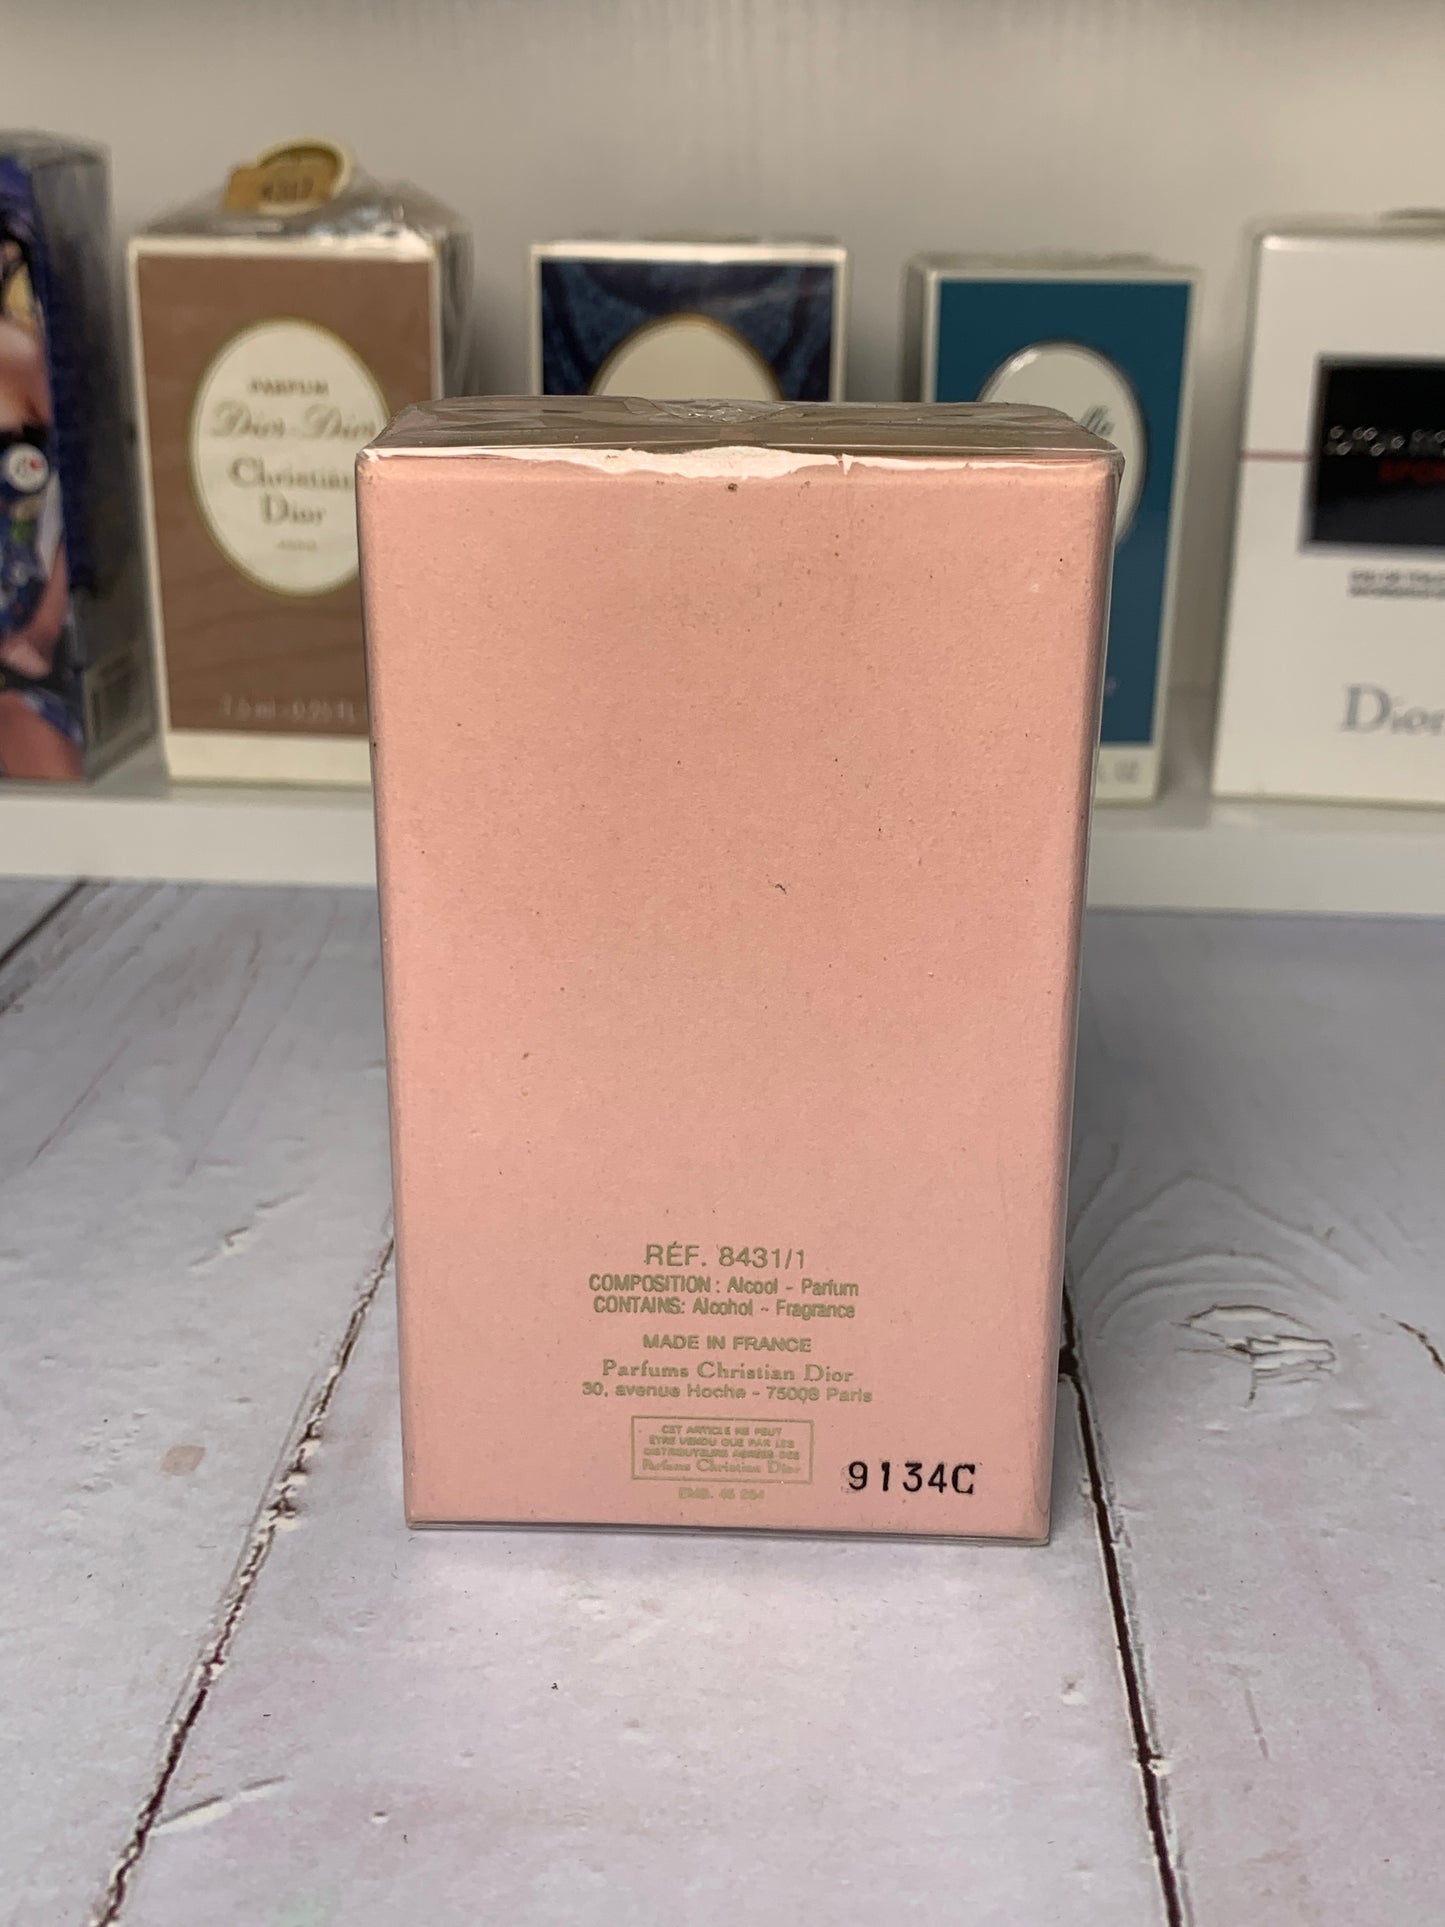 New Christian Dior  Diorissimo 7.5ml 1/4 oz parfum perfume  - 250423-21